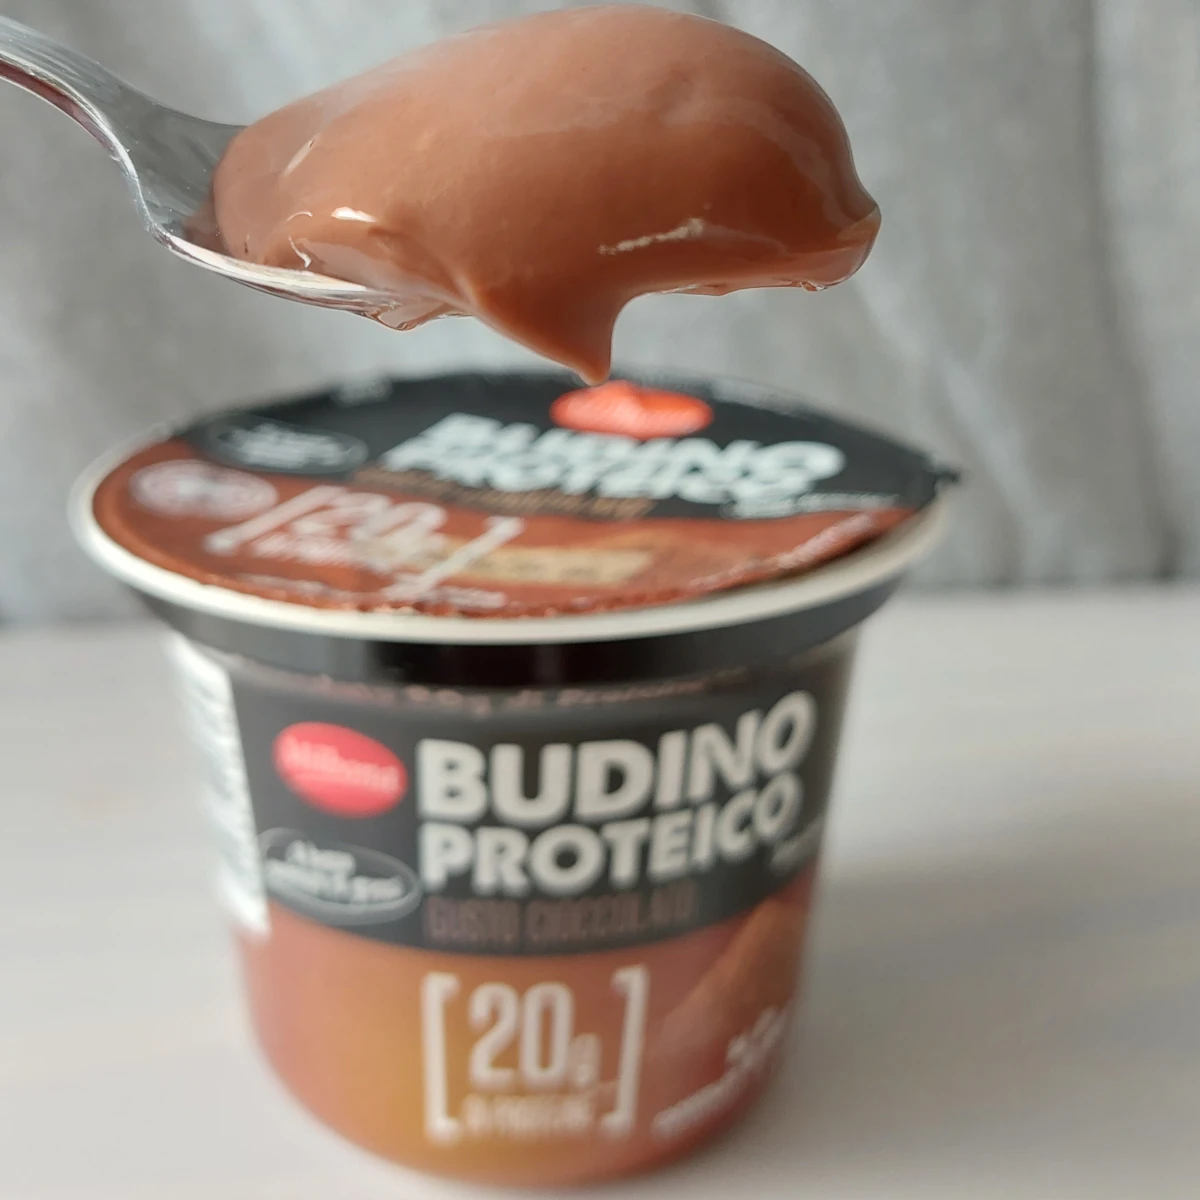 lidl-budino-proteico-cacao-opinione